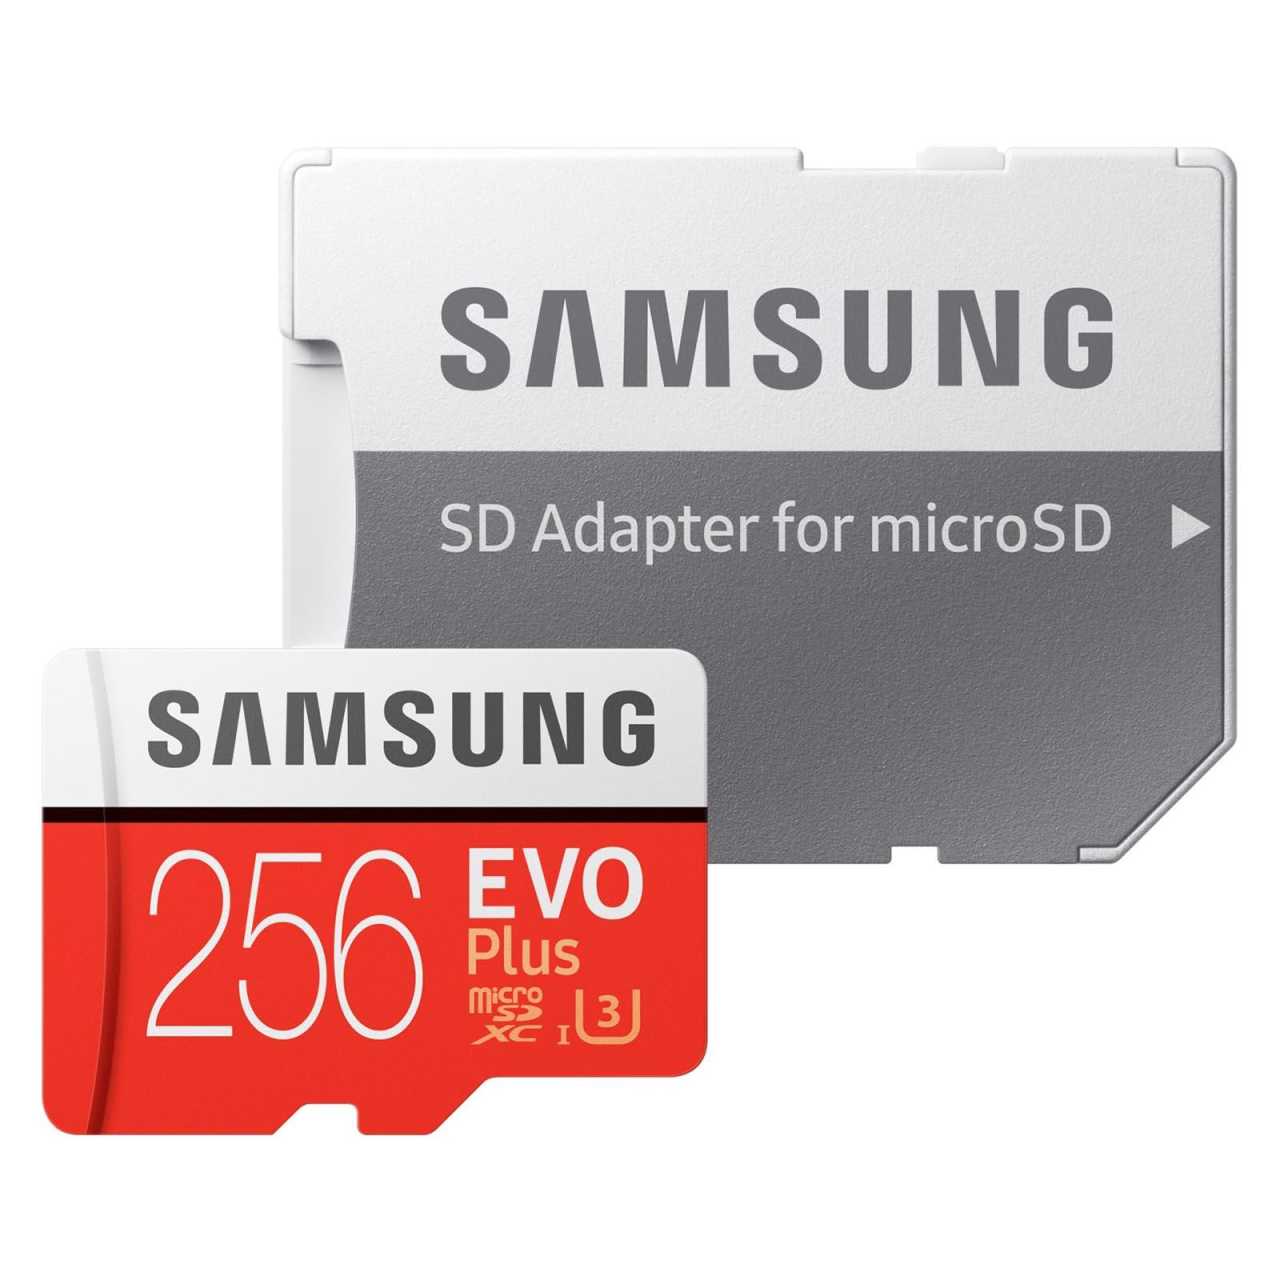 Samsung 256GB microSDXC UHS-I U3 EVO Plus Speicherkarte Class 10 mit SD-Adapter von Samsung